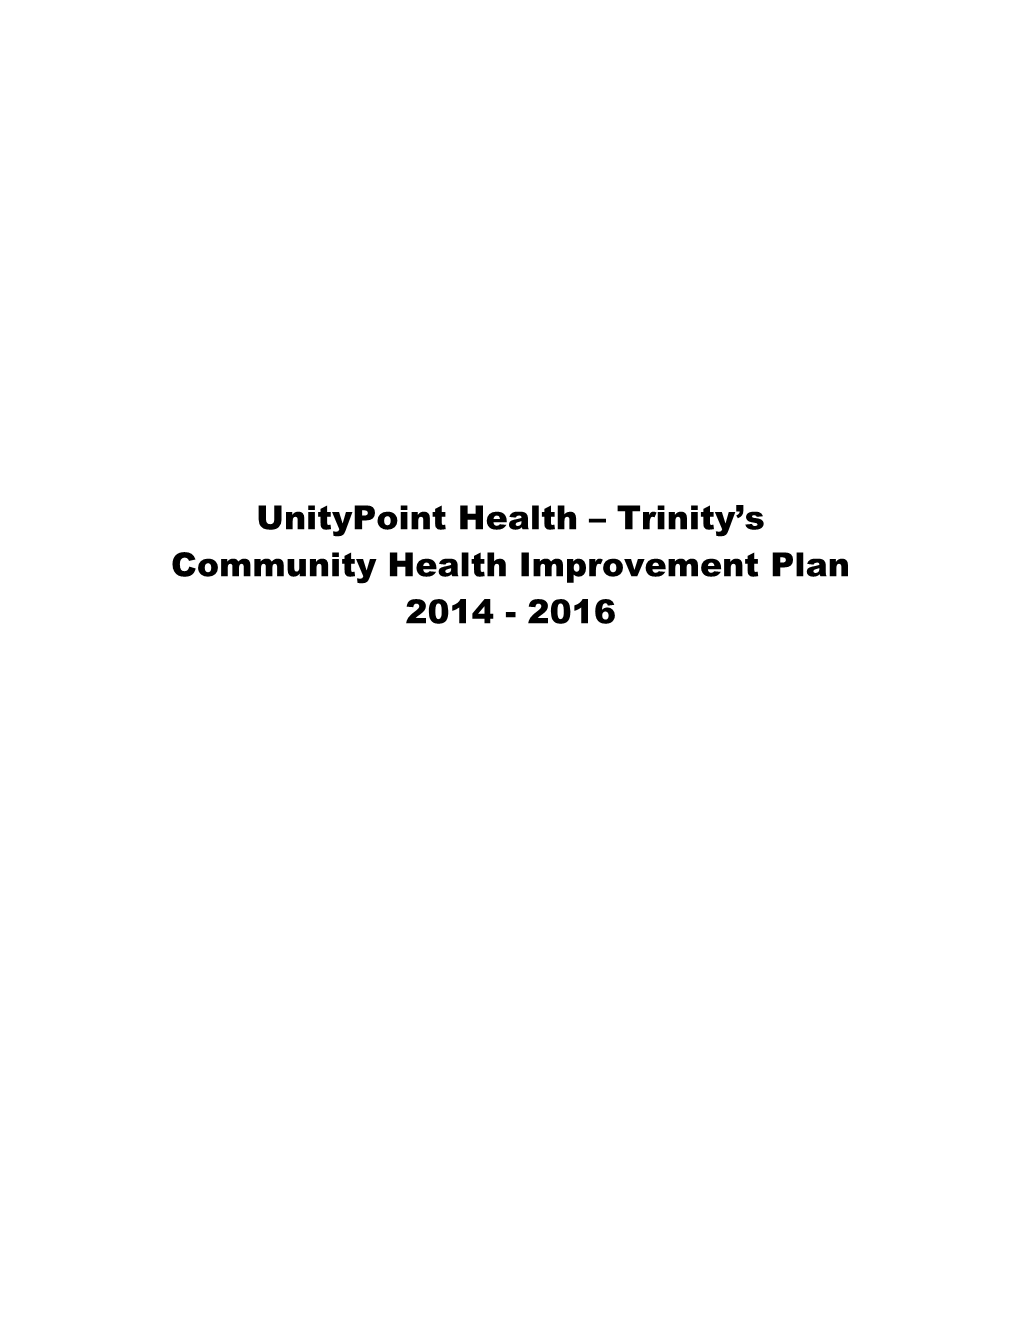 Community Health Improvement Plan